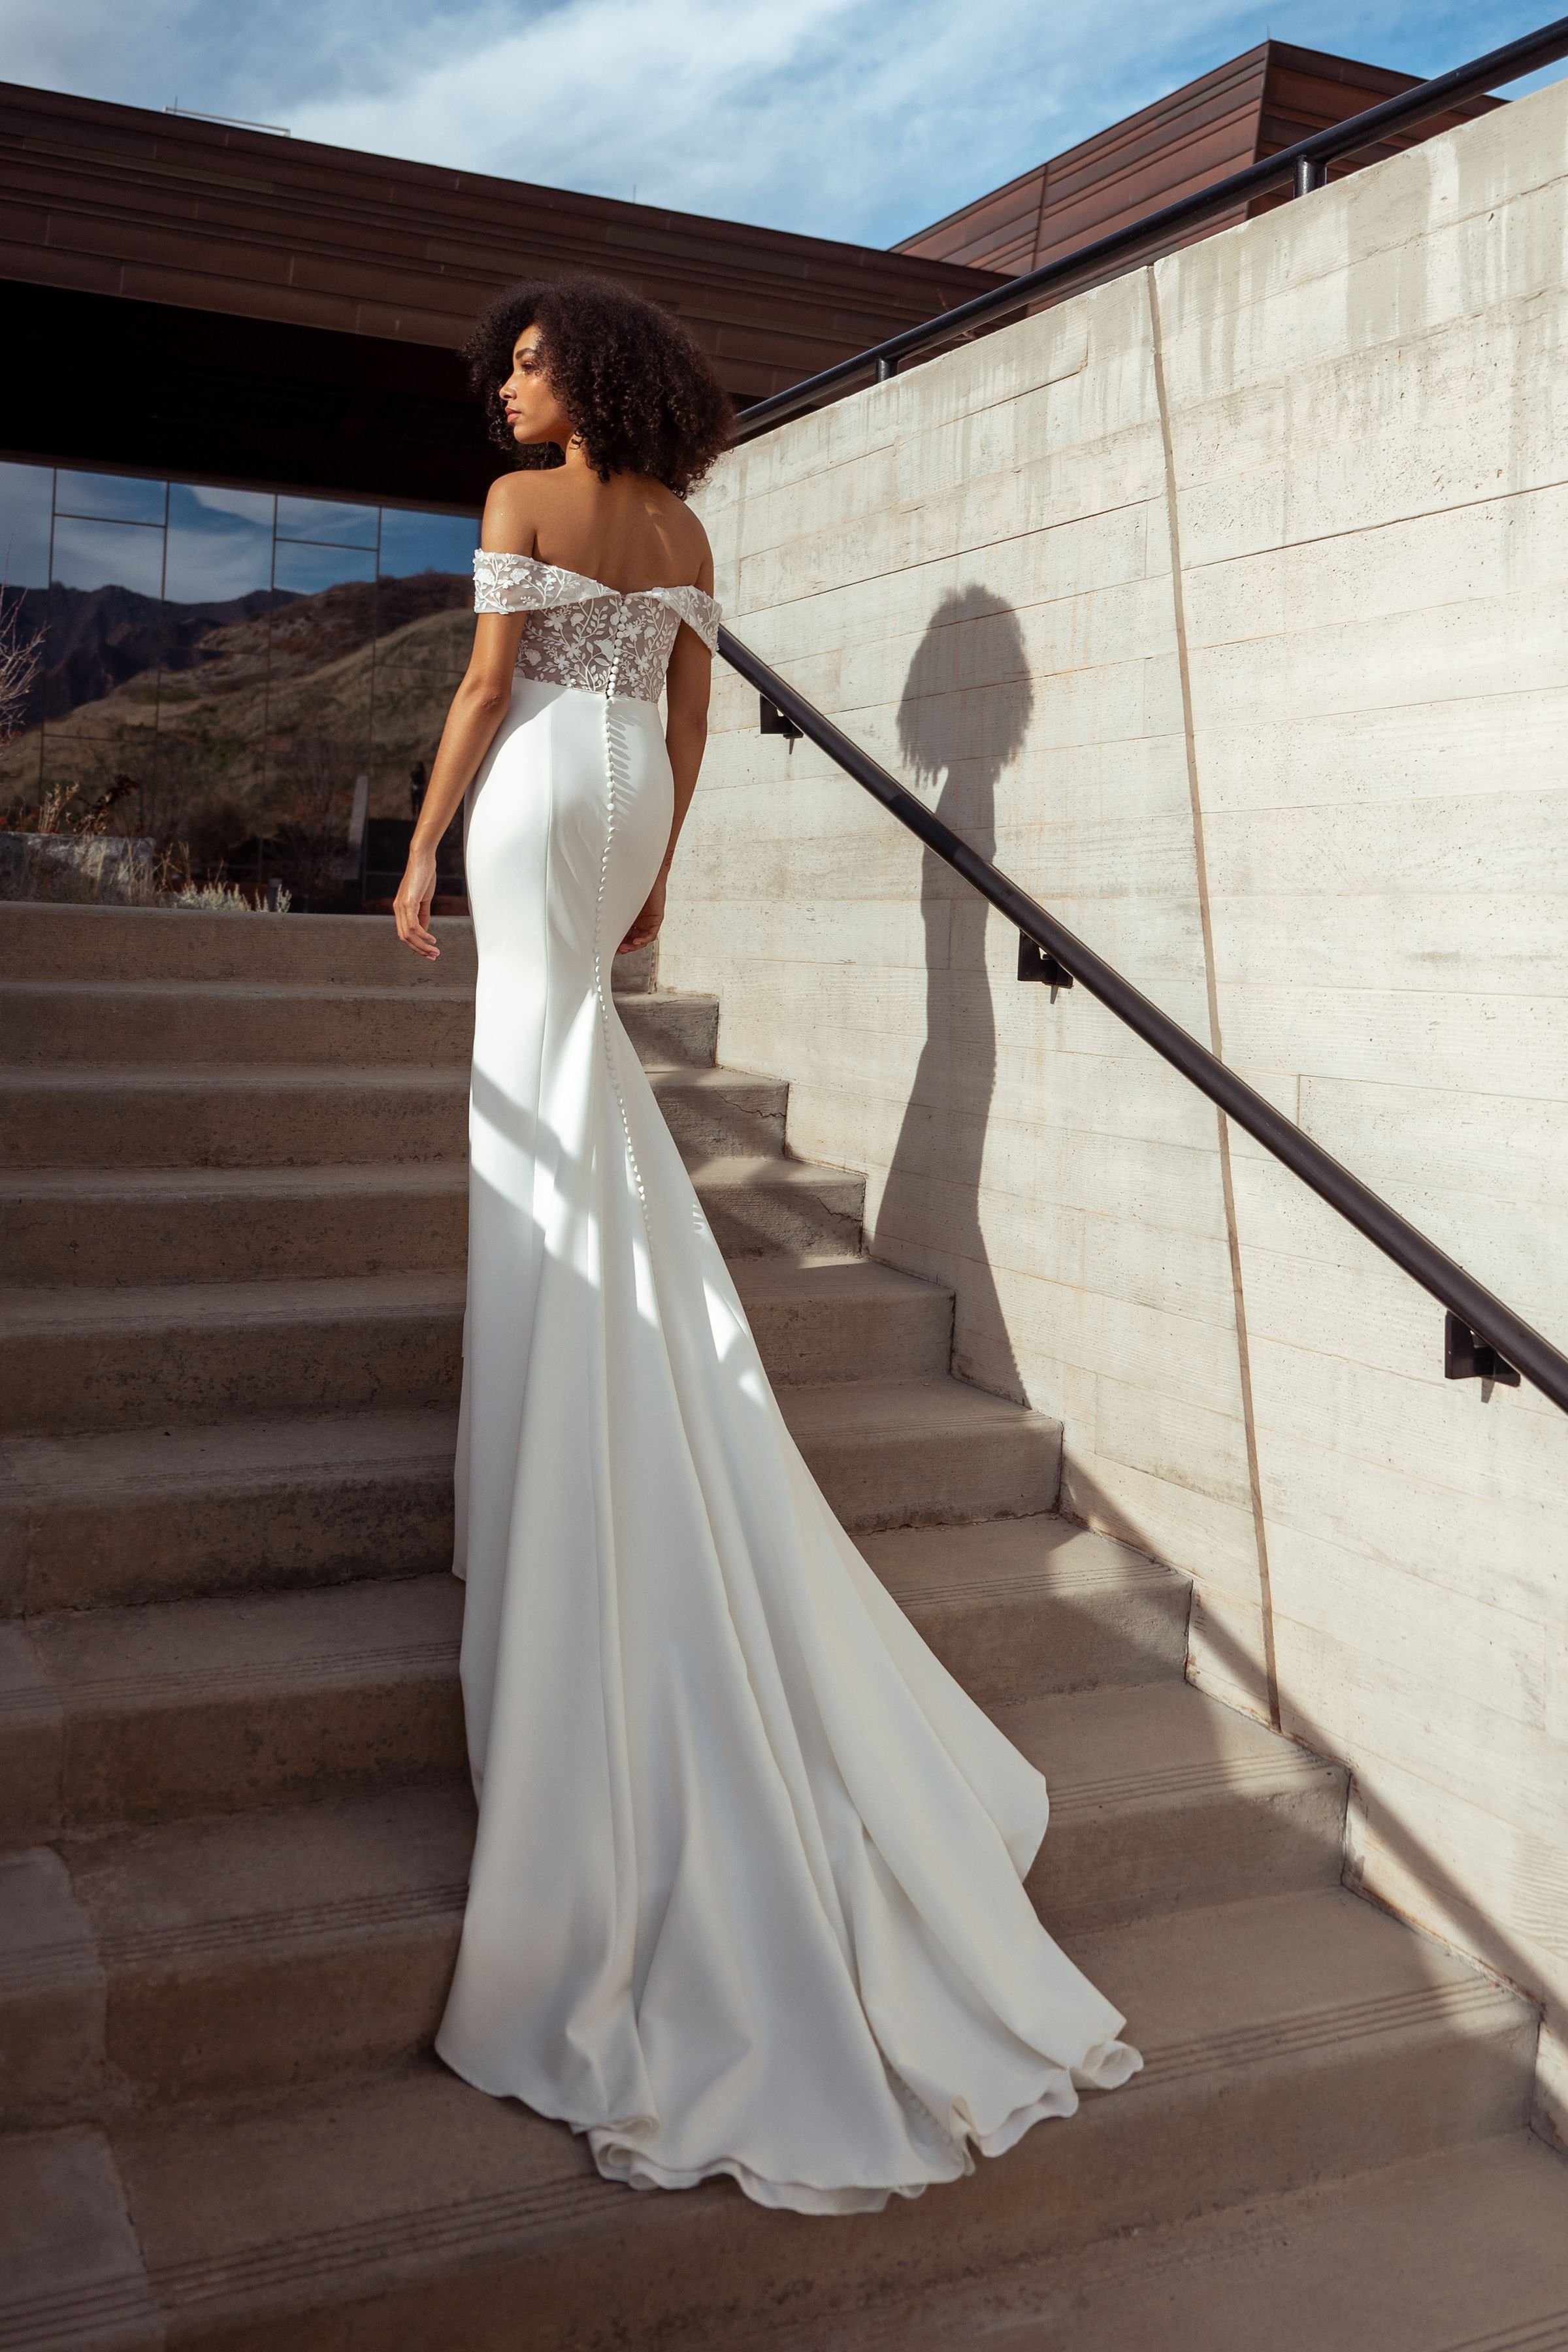 blanc-de-blanc-bridal-boutique-pittsburgh-dress-wedding-gown-Angelica.jpeg